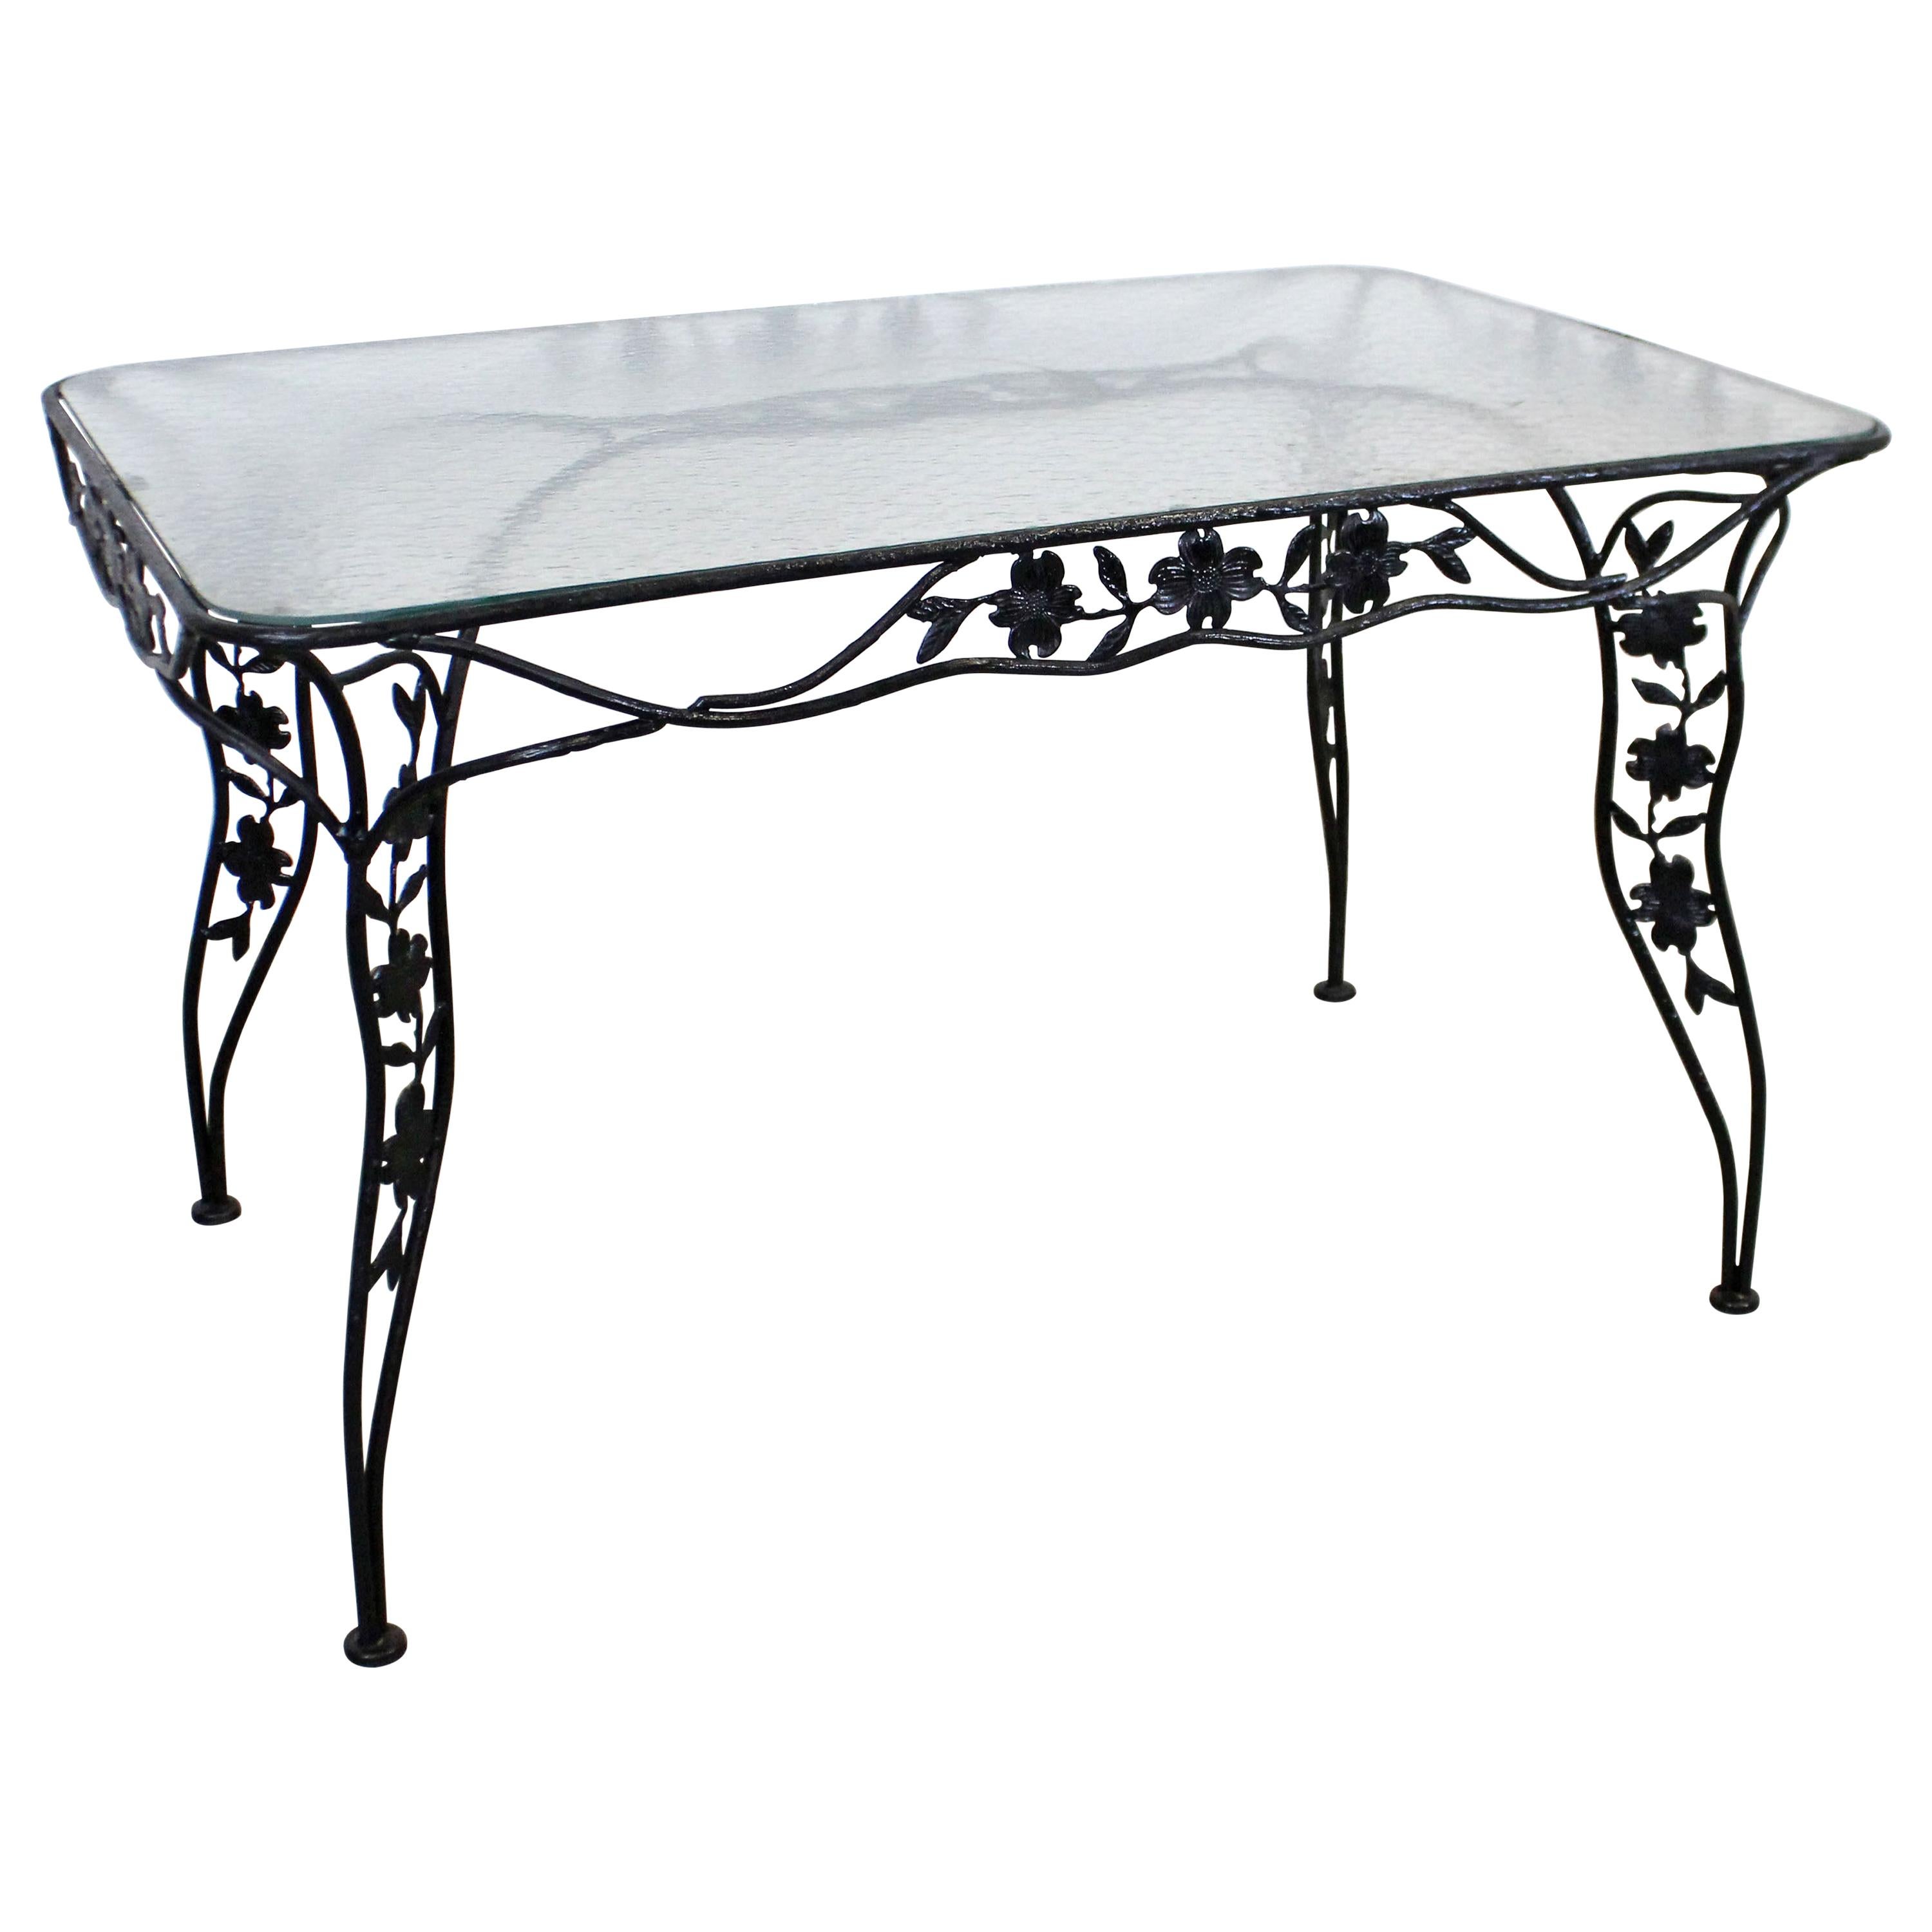 Table White Garden Table Antique Balcony Table Iron Patio Table Art Nouveau Shabby 